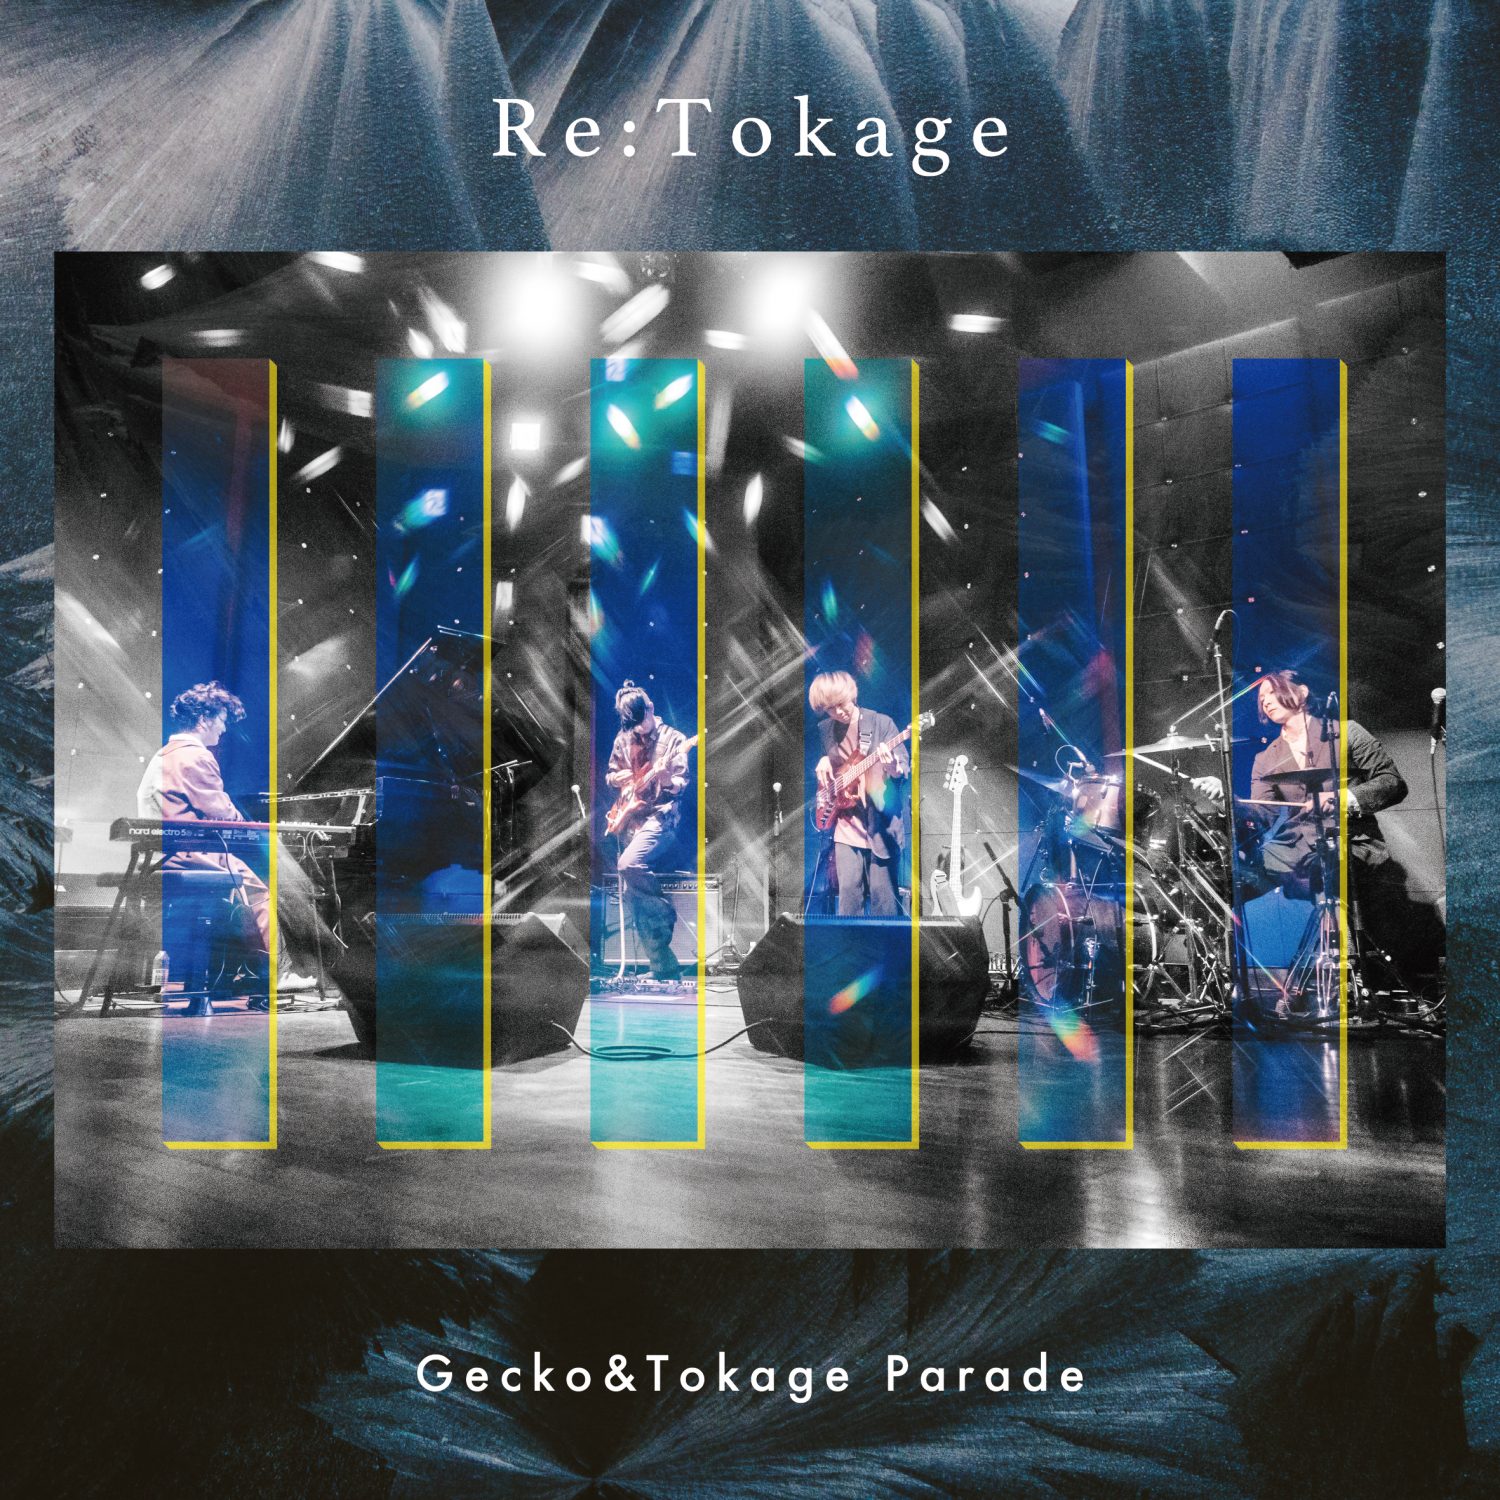 Gecko&Tokage Parade / Re:Tokage